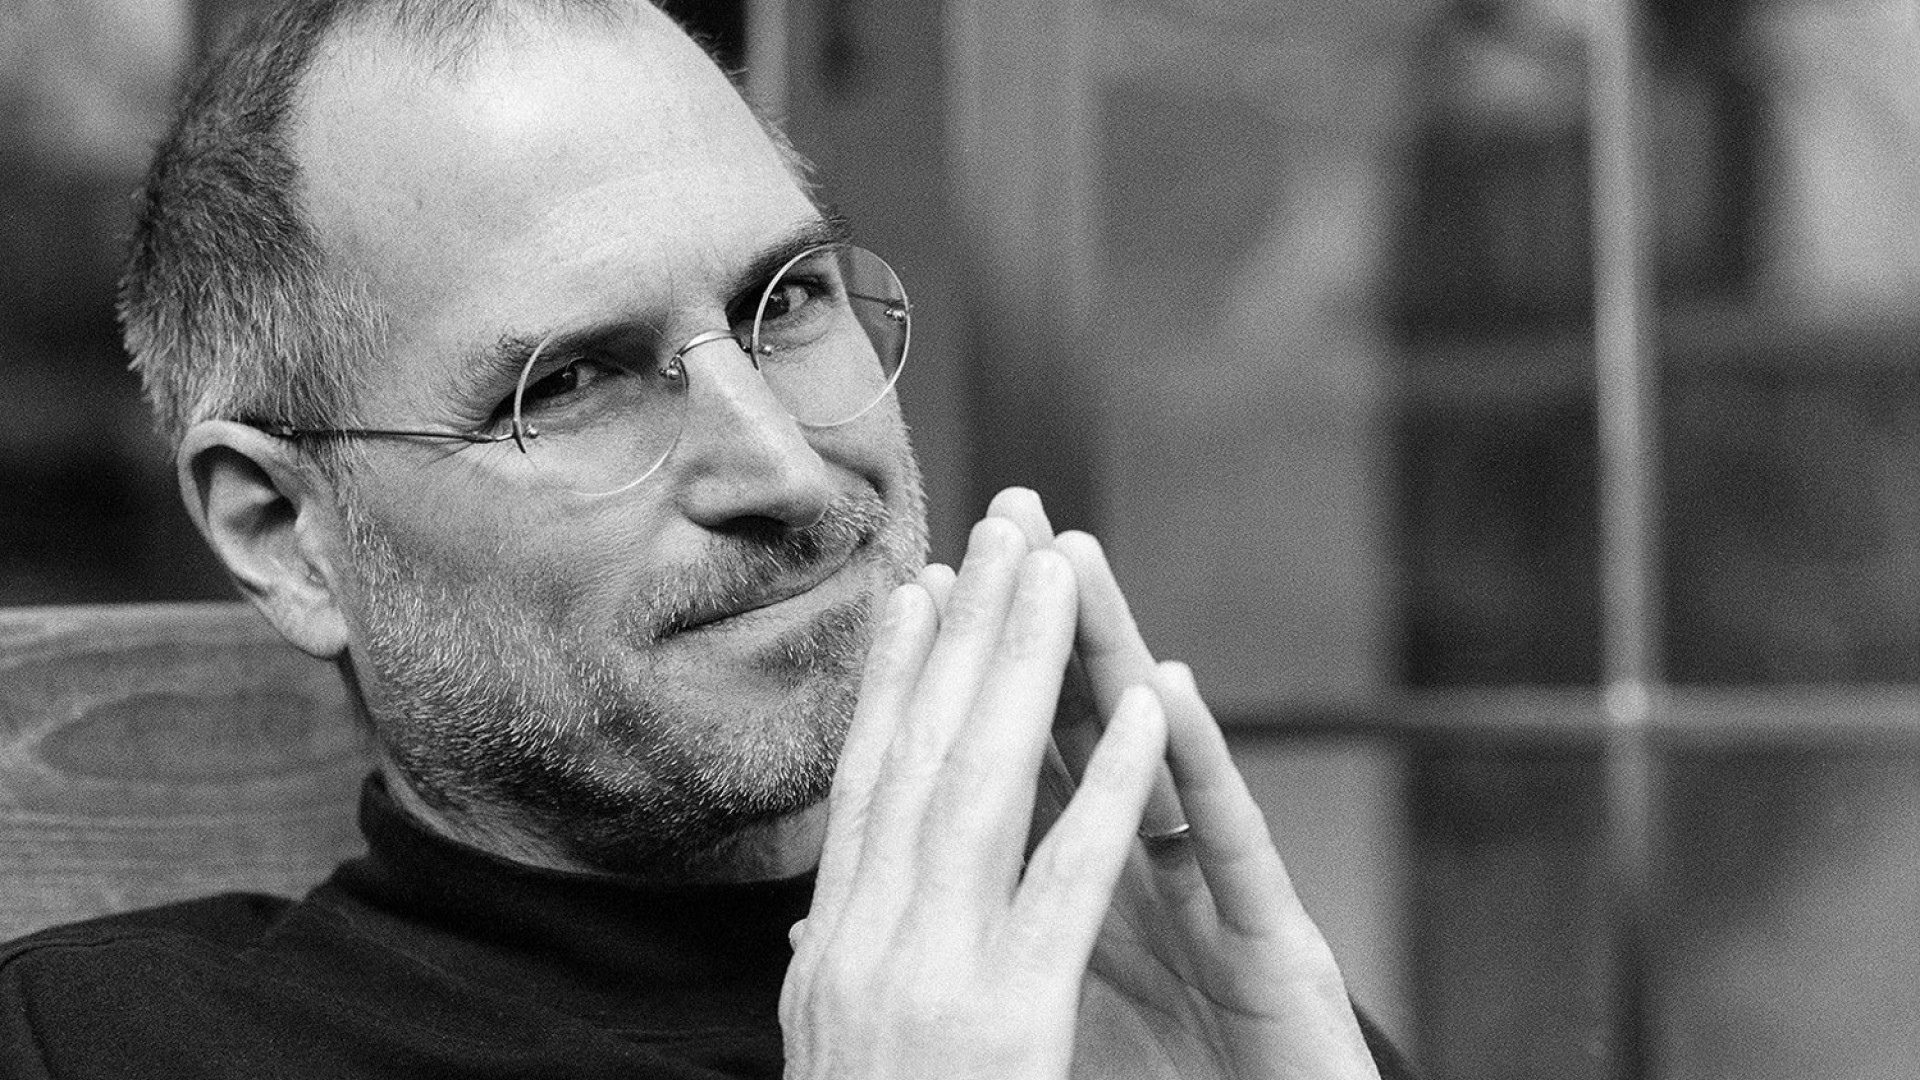 A headshot of Steve Jobs